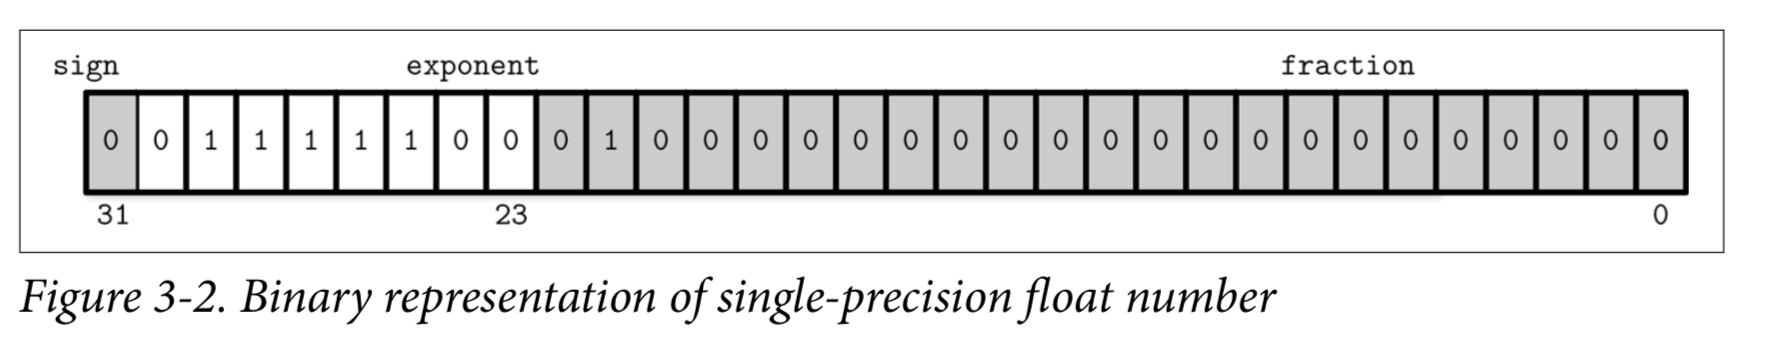 Figure 3-2. Binary representation of single-precision float number